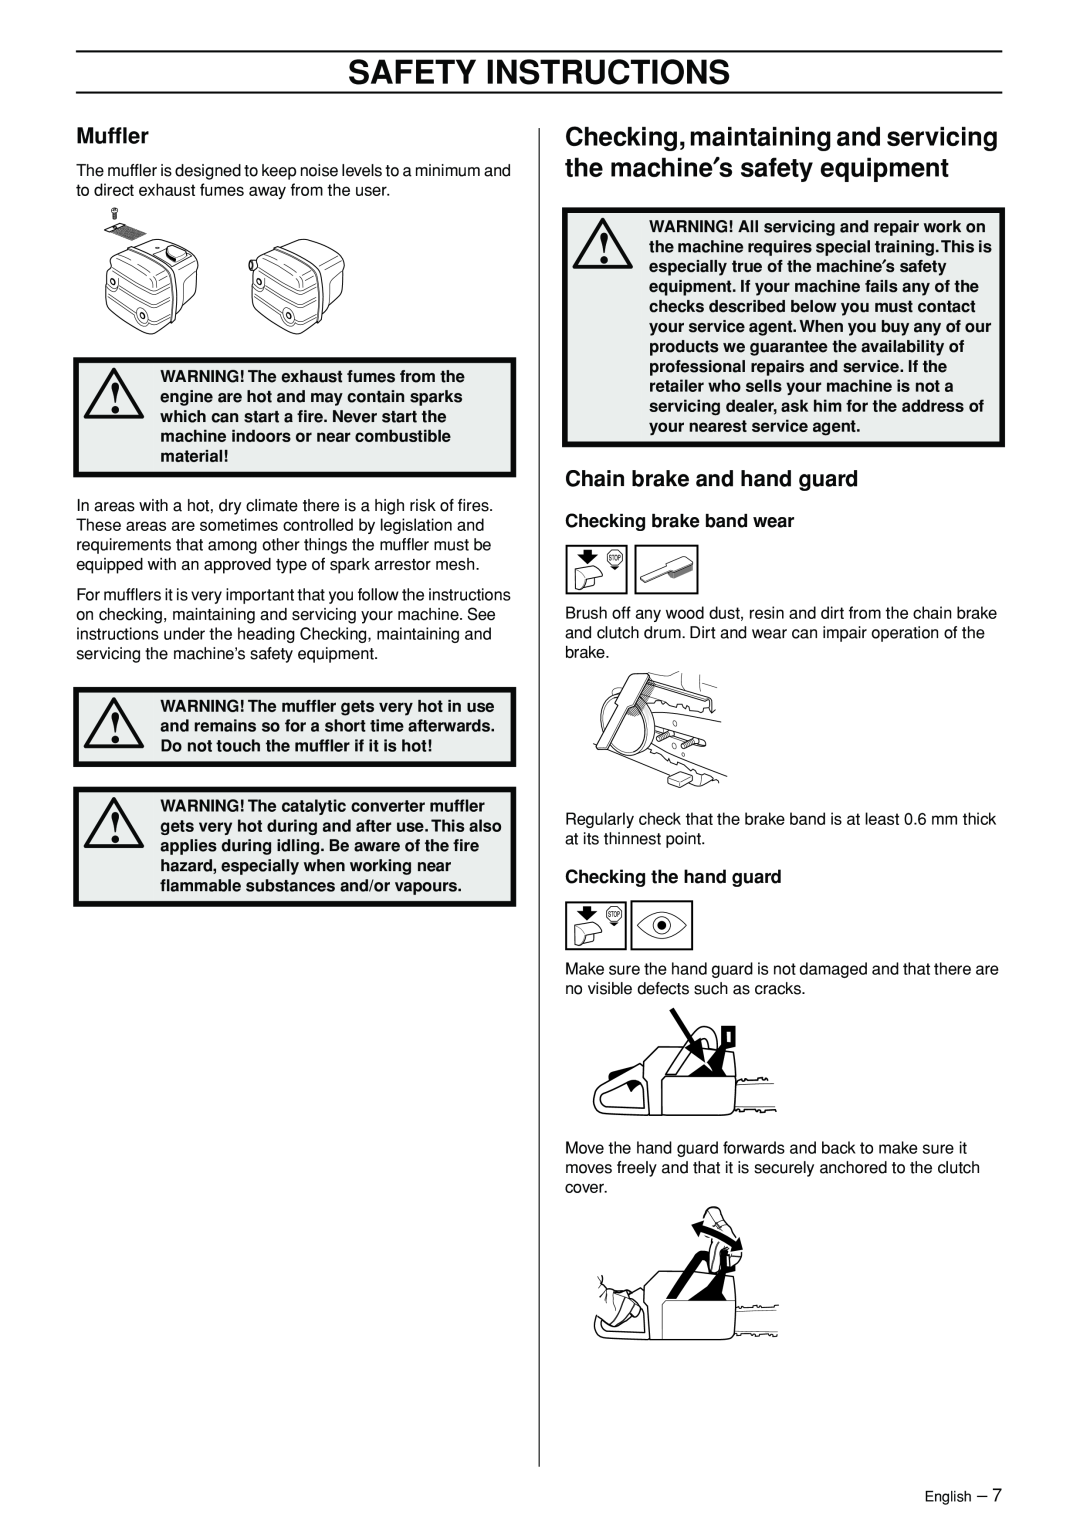 Jonsered CS 2147 manual Mufﬂer, Checking brake band wear, Checking the hand guard, Safety Instructions 